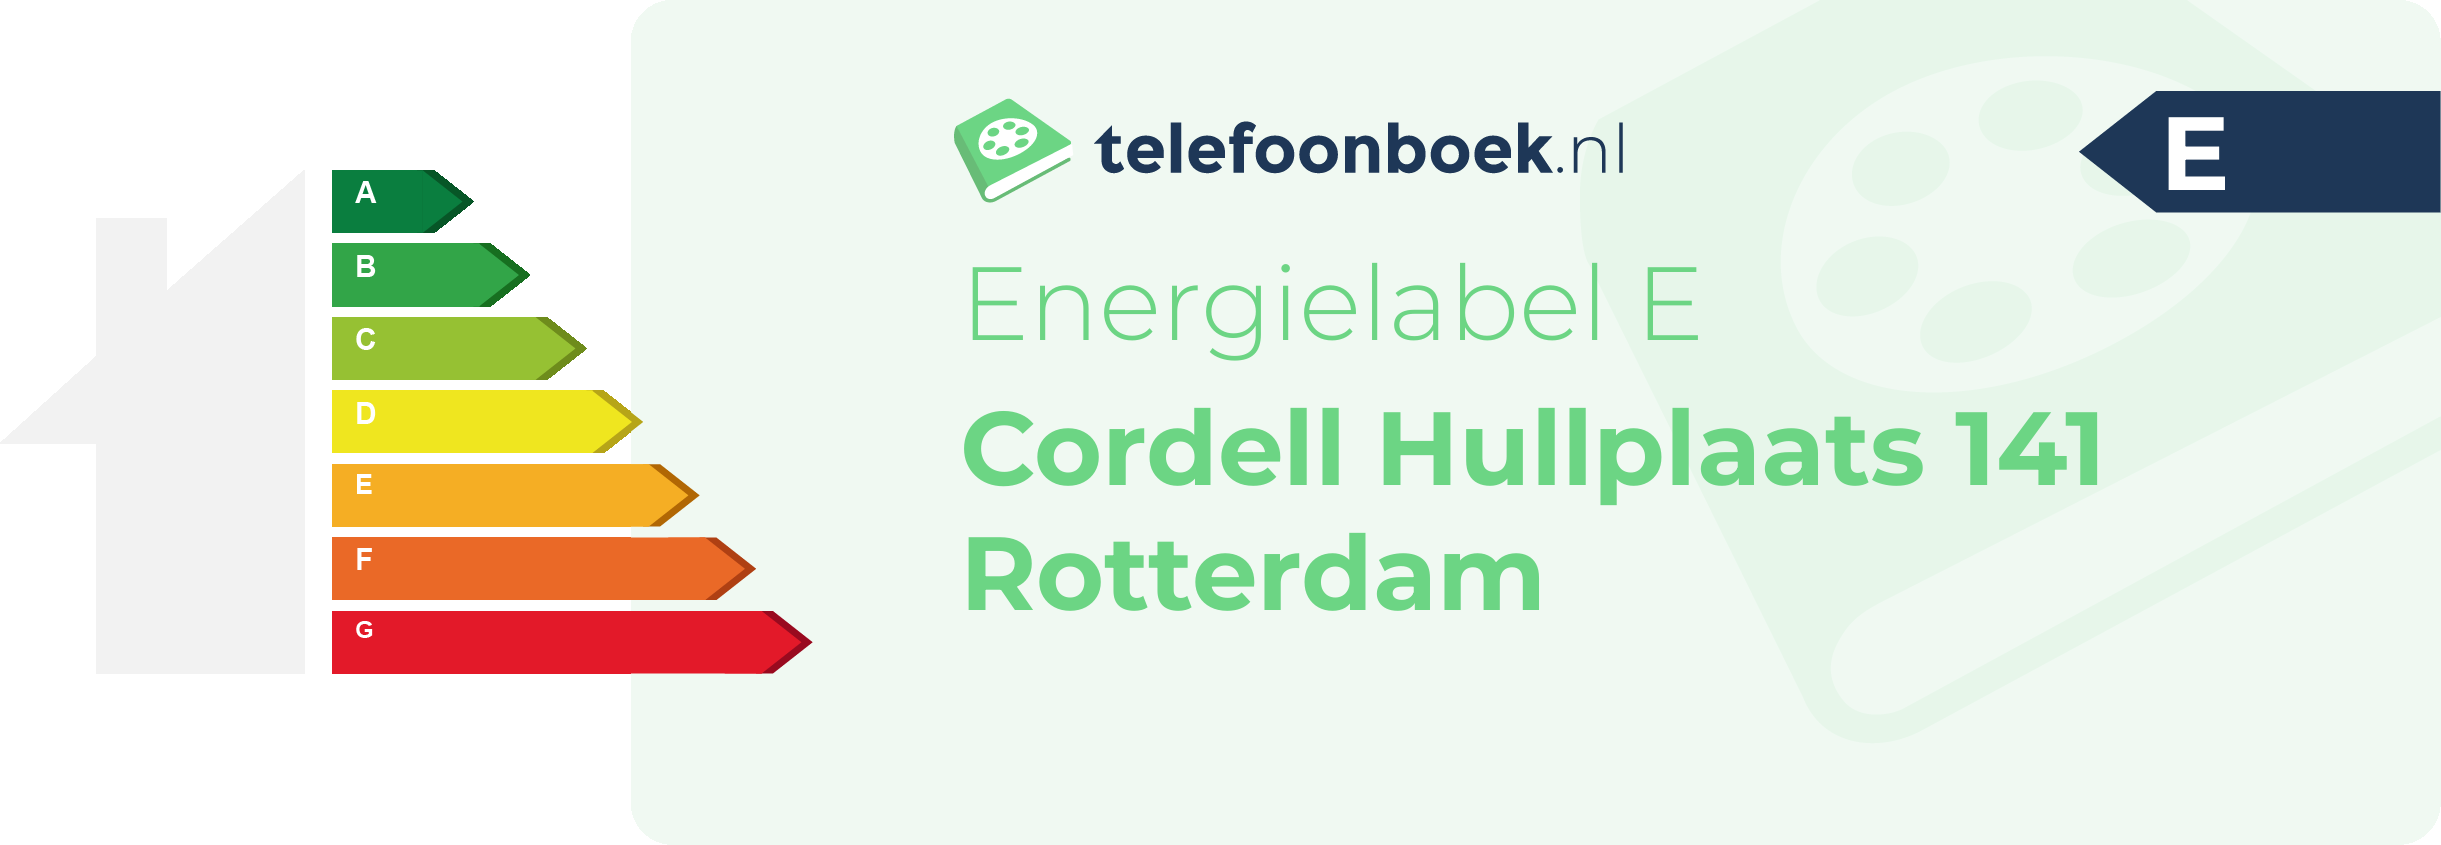 Energielabel Cordell Hullplaats 141 Rotterdam